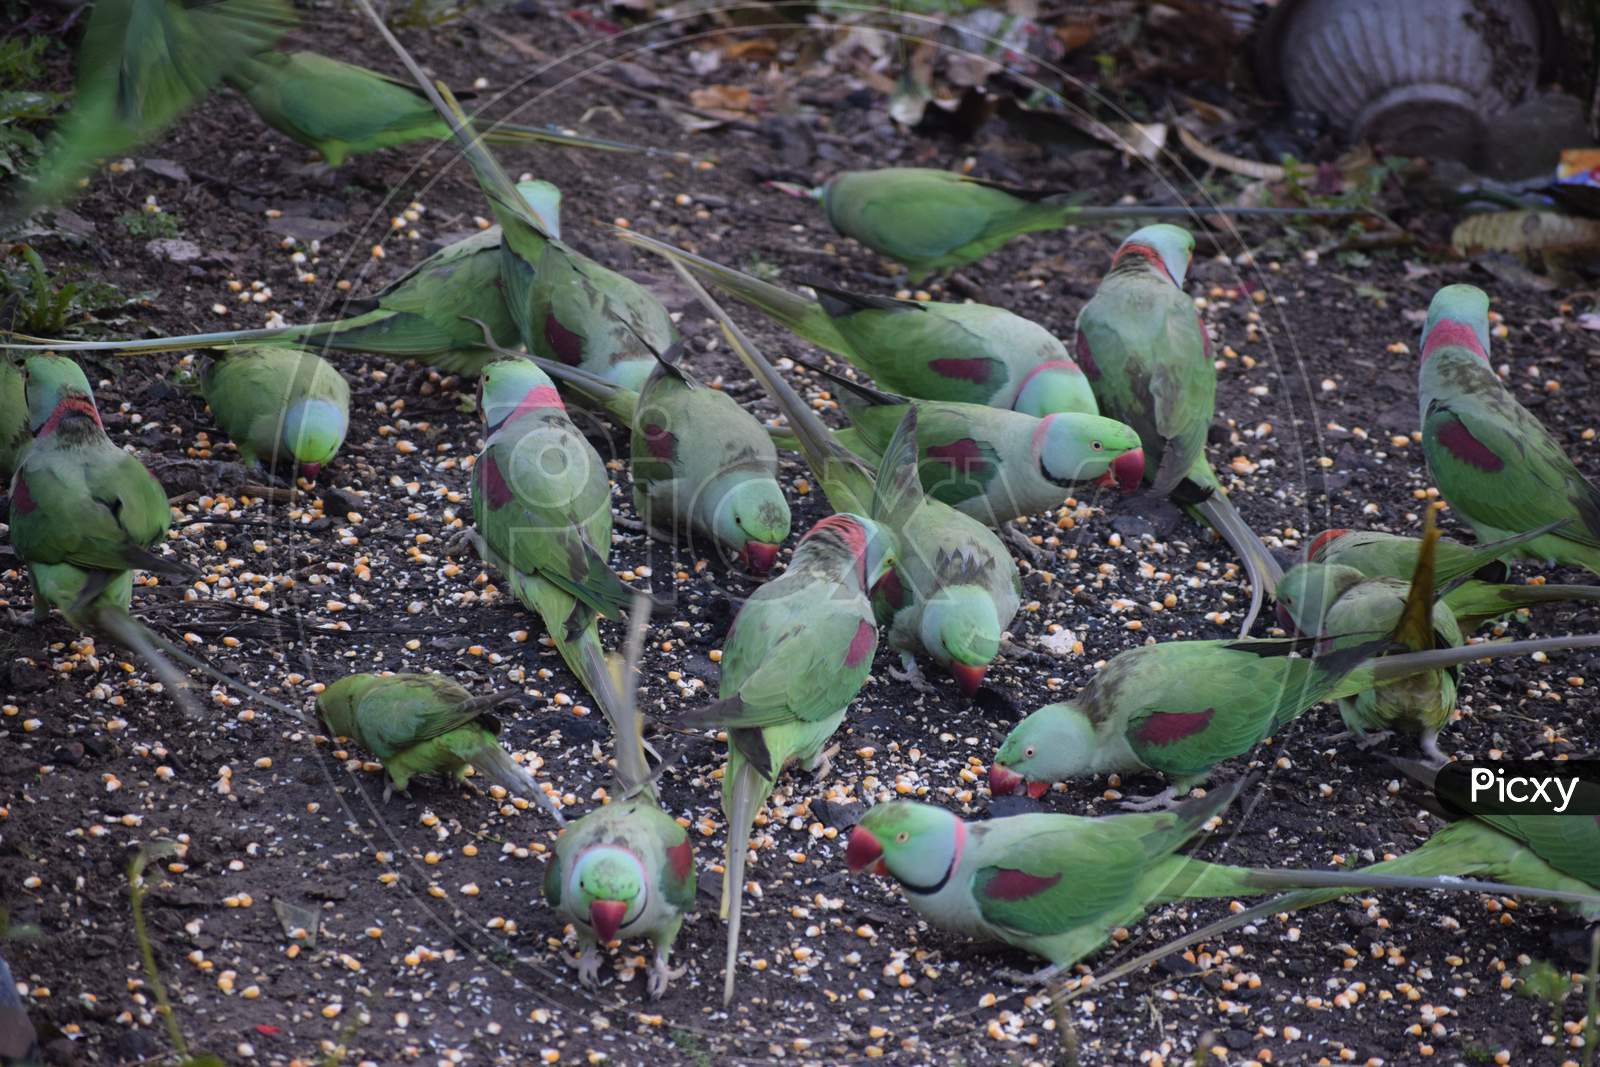 Parakeet eating grain in group